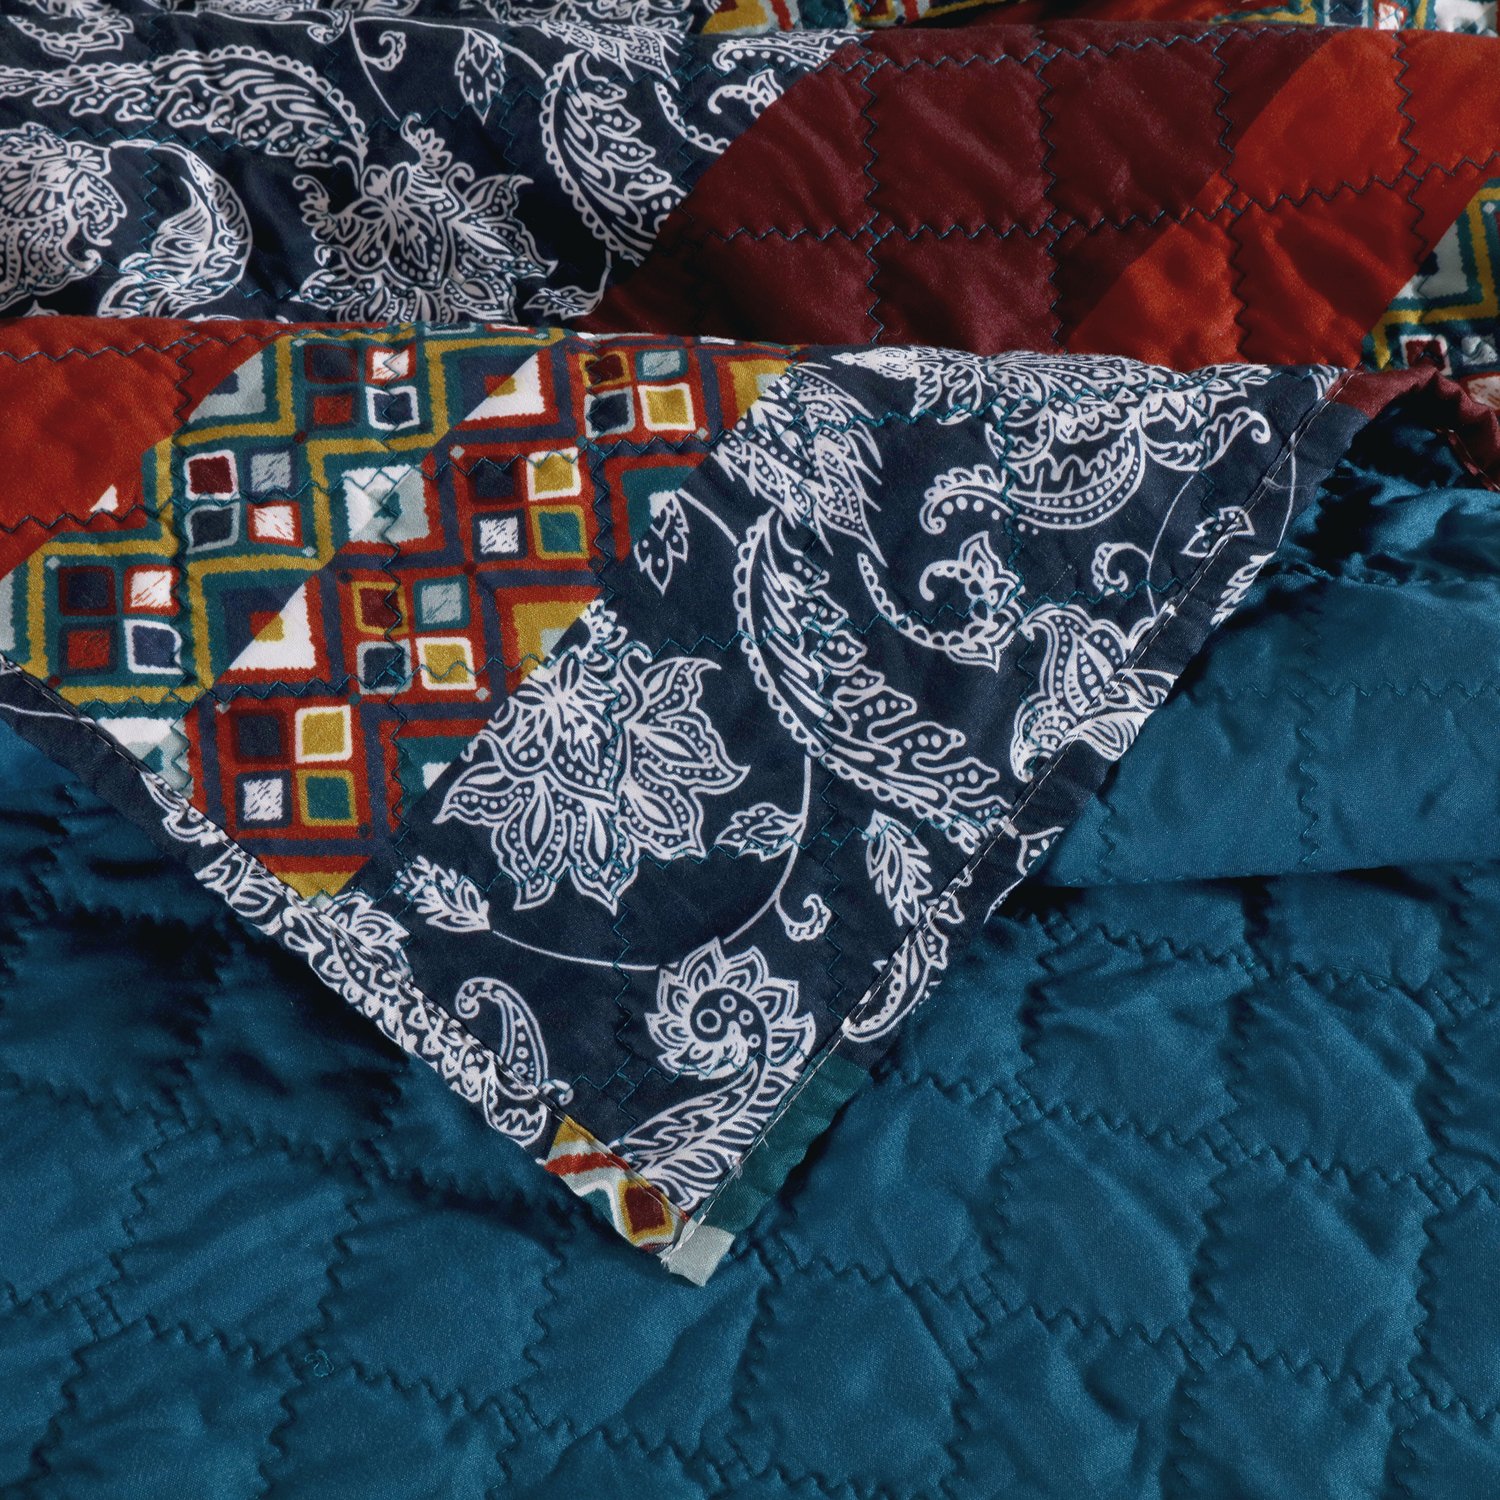 reversible comforter set Greenland Home Fashions Quilt Set Multi